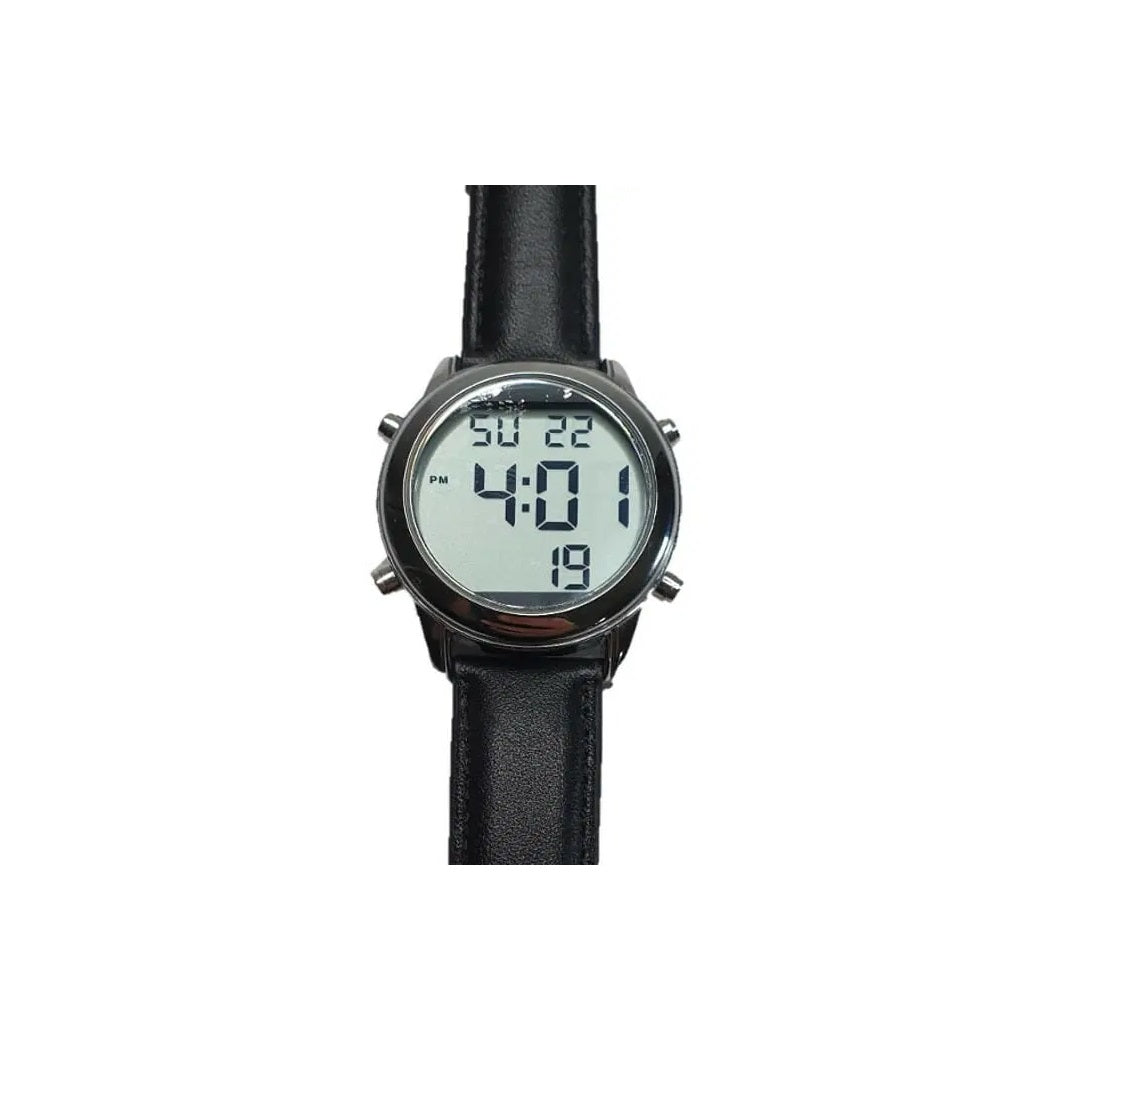 Low Vision Nederlandssprekend Digitaal Horloge Kopen van  Low Vision?- Vanaf €88.95 bij Pucshop.nl